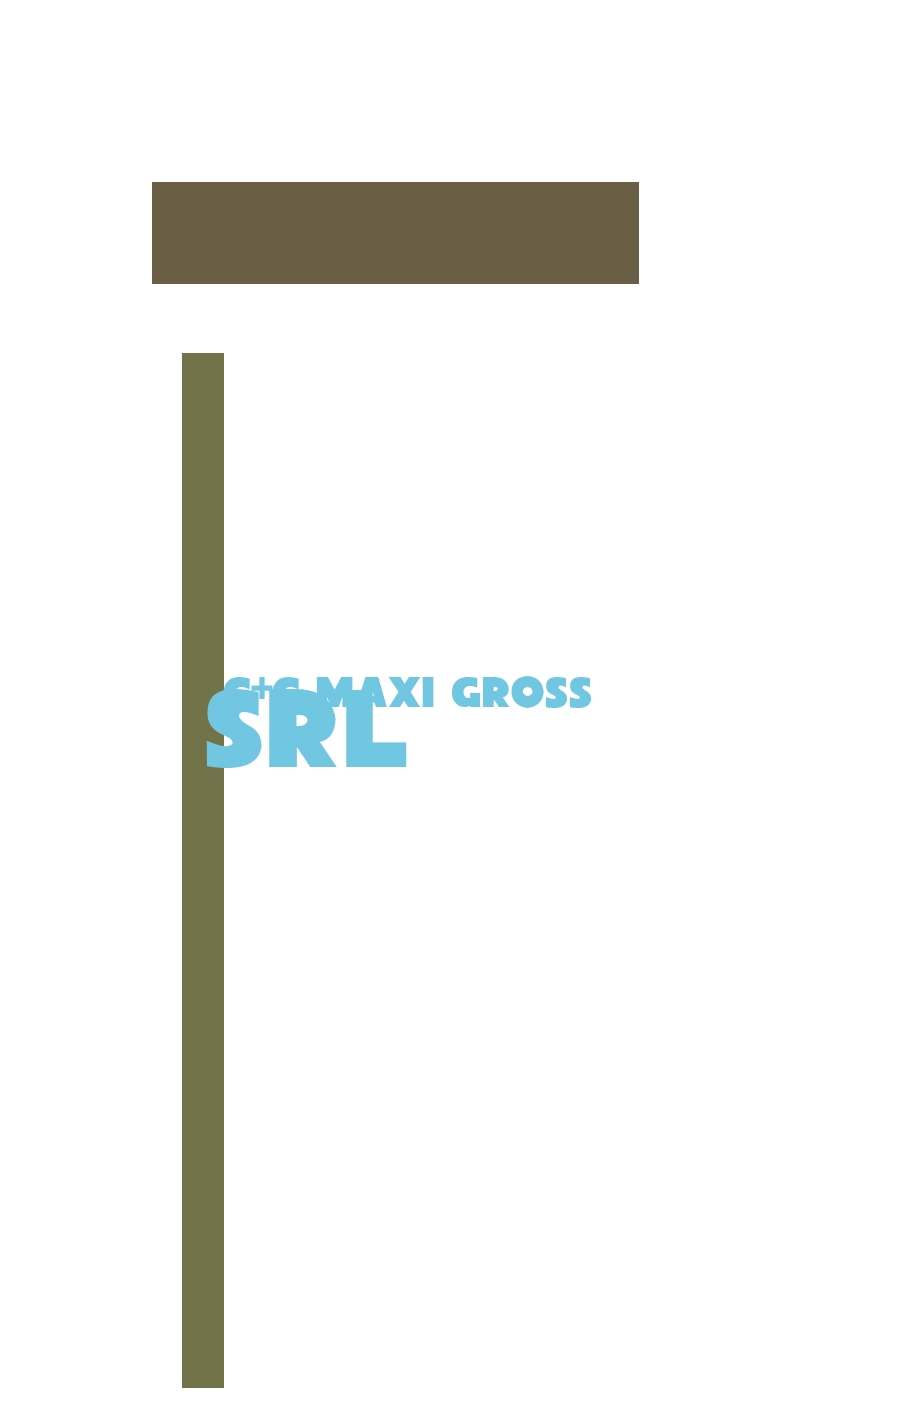 logo C+C Maxi Gross Srl